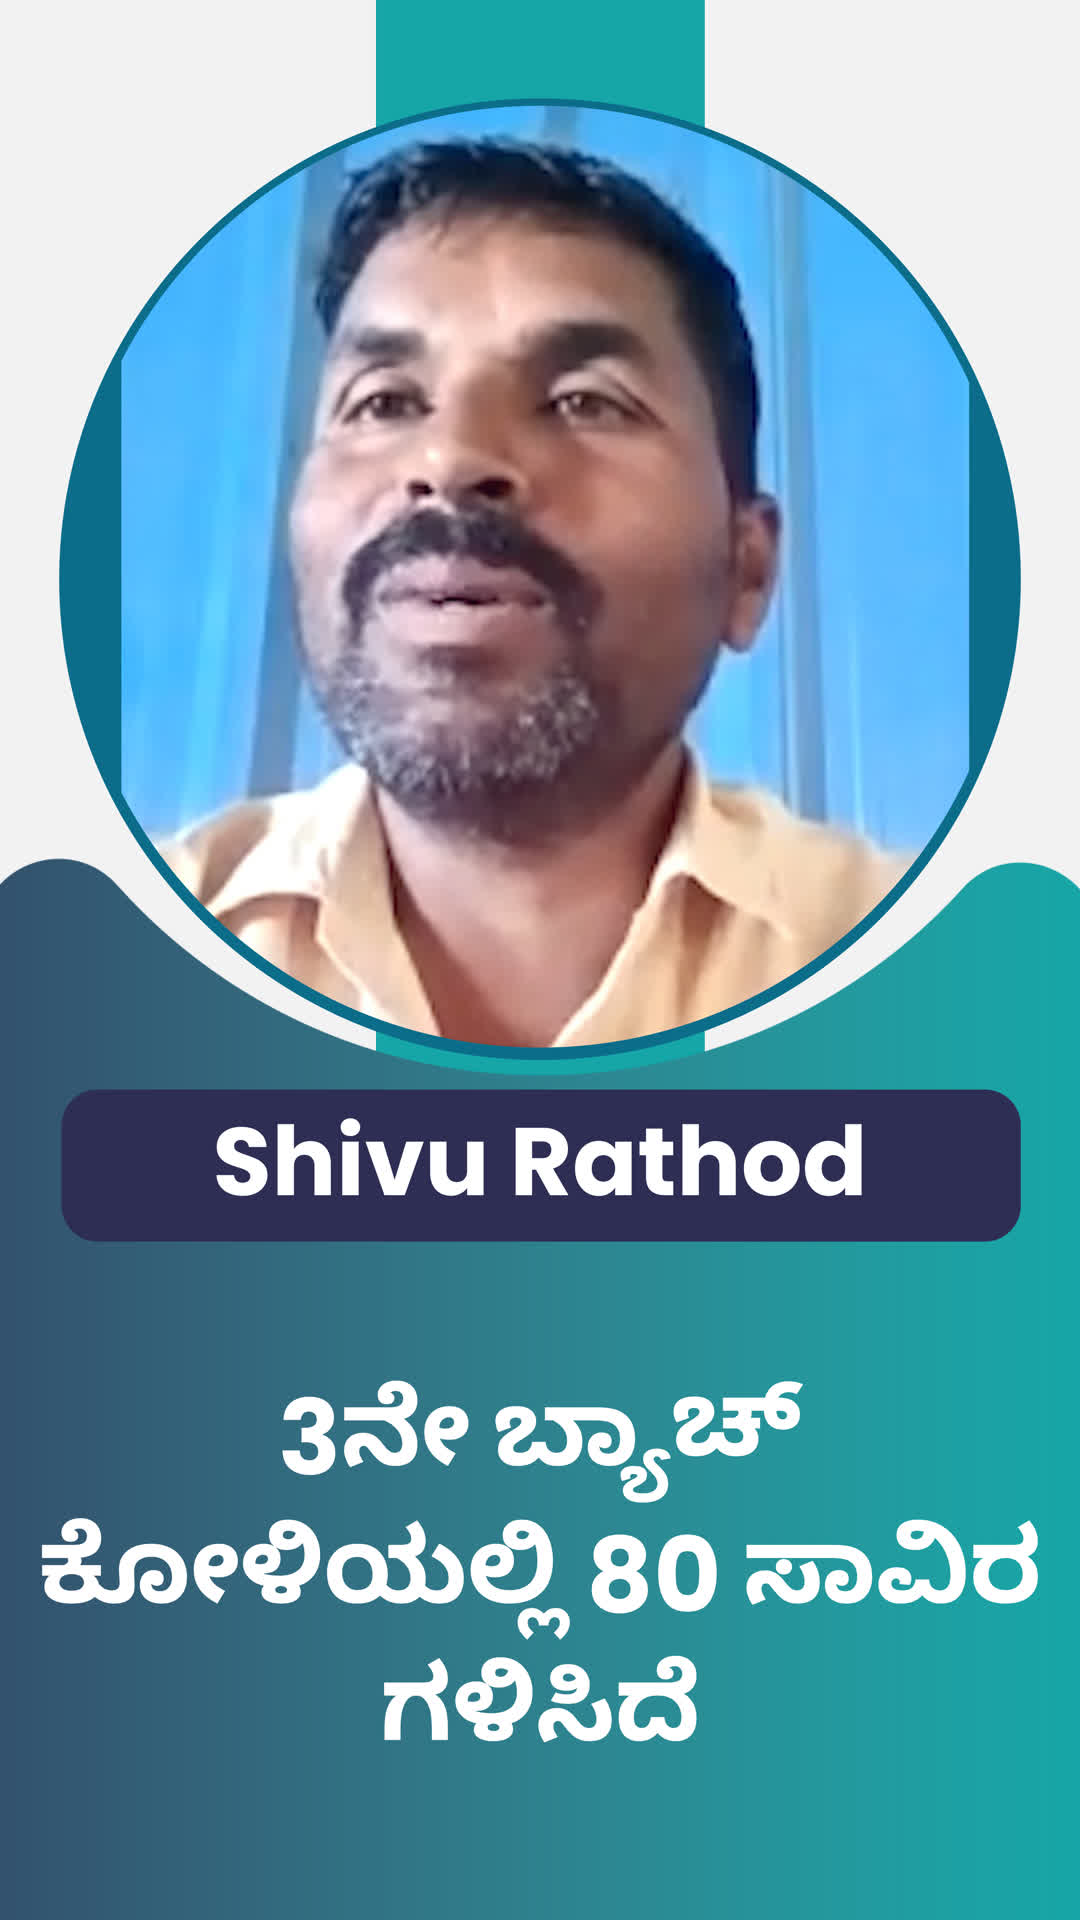 Shivu Rathod 's Honest Review of ffreedom app - Vijayapura ,Karnataka